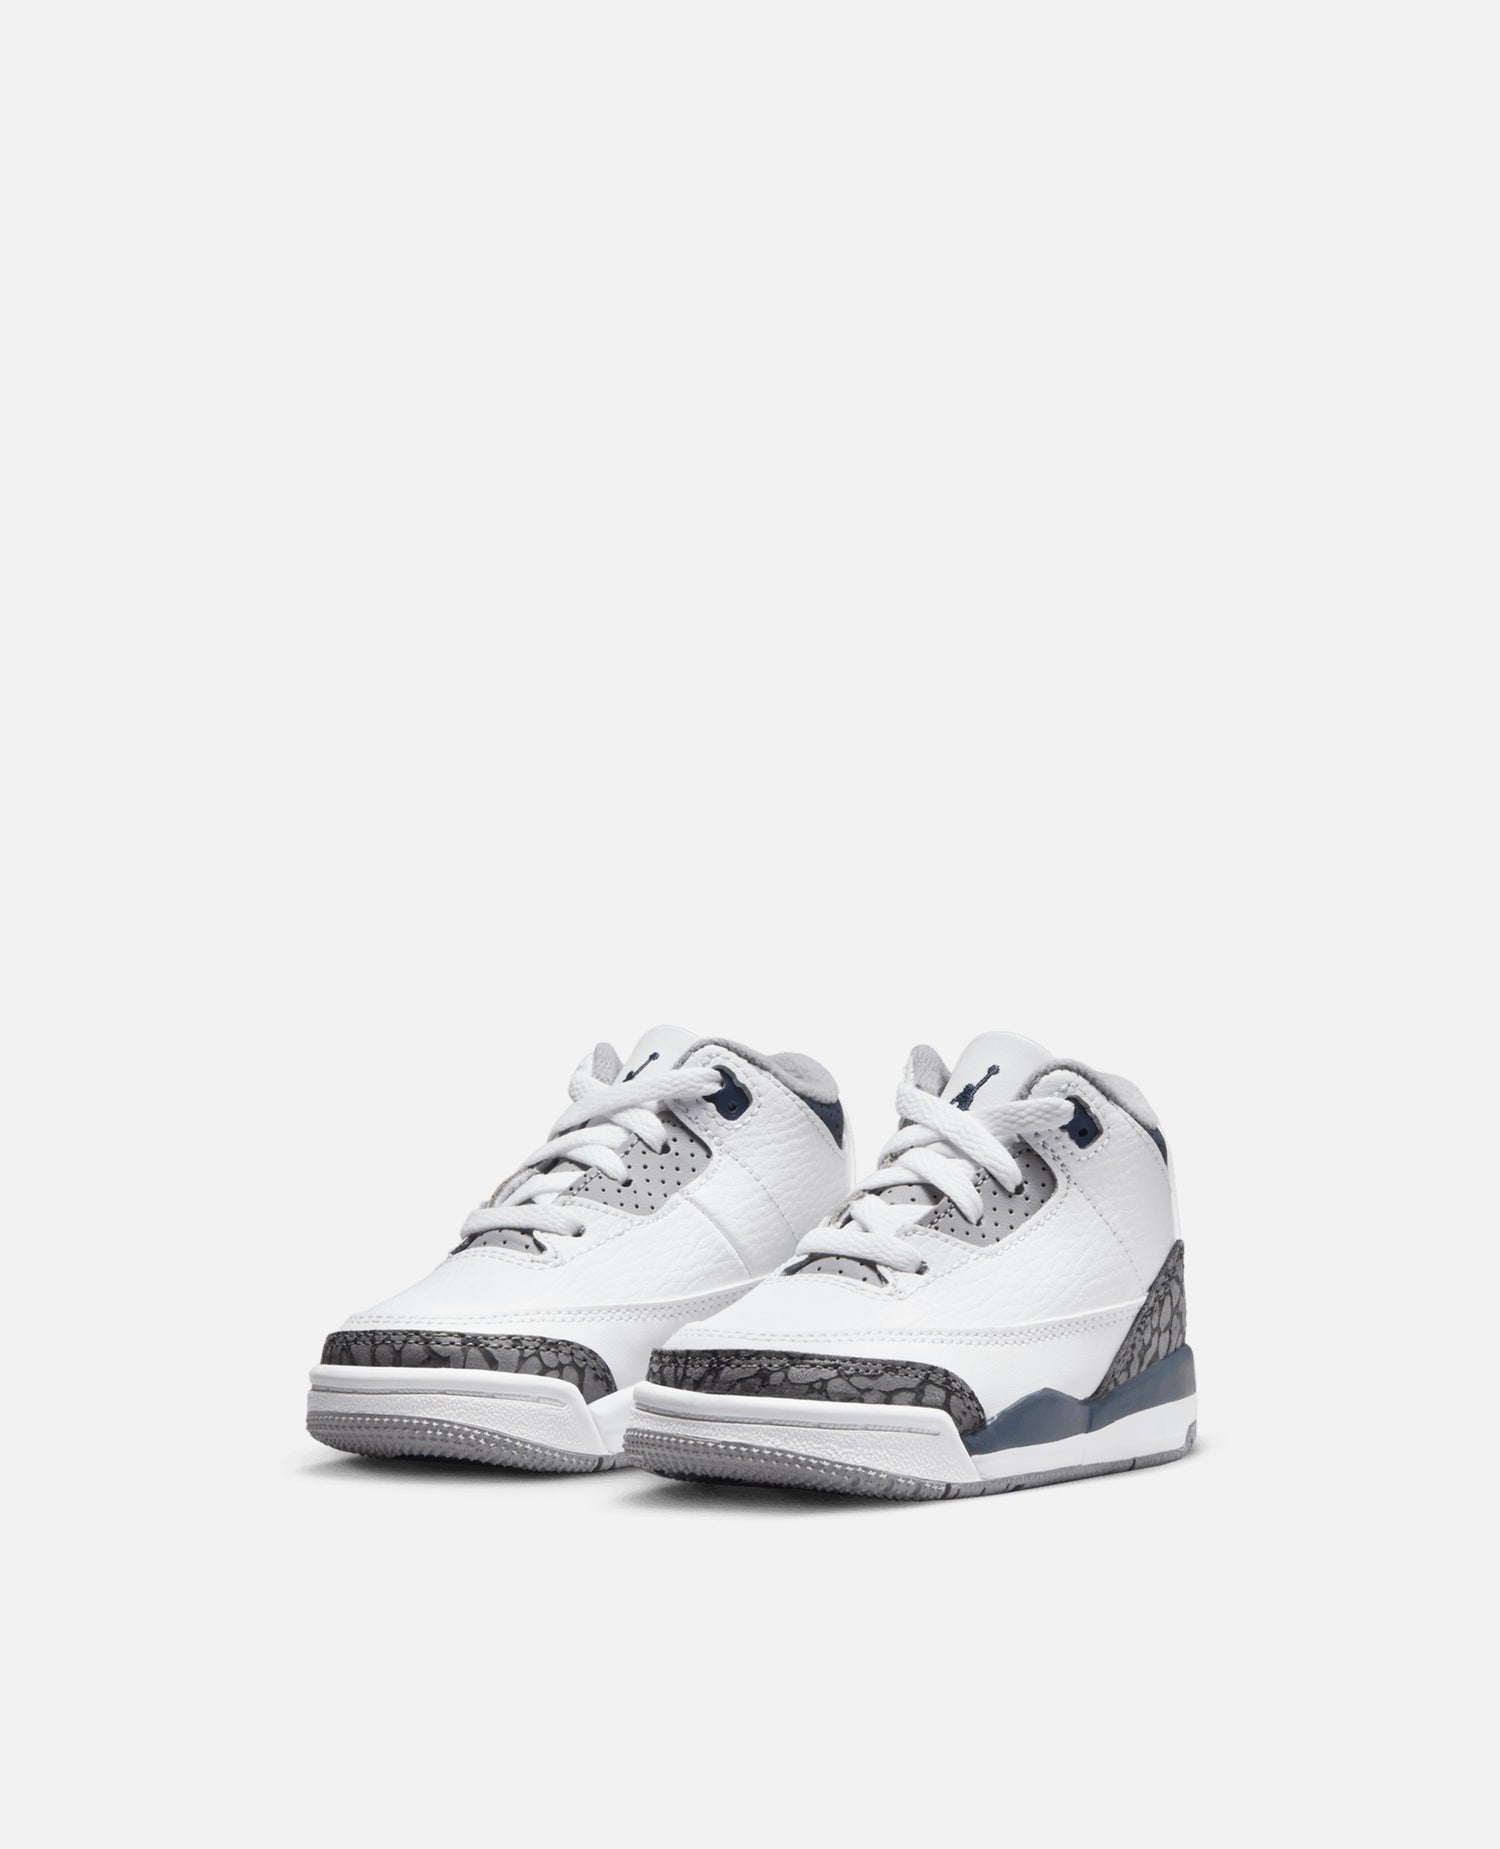 Nike Jordan 3 Retro (TD) (Blanc/Bleu marine minuit-Gris ciment-Noir)